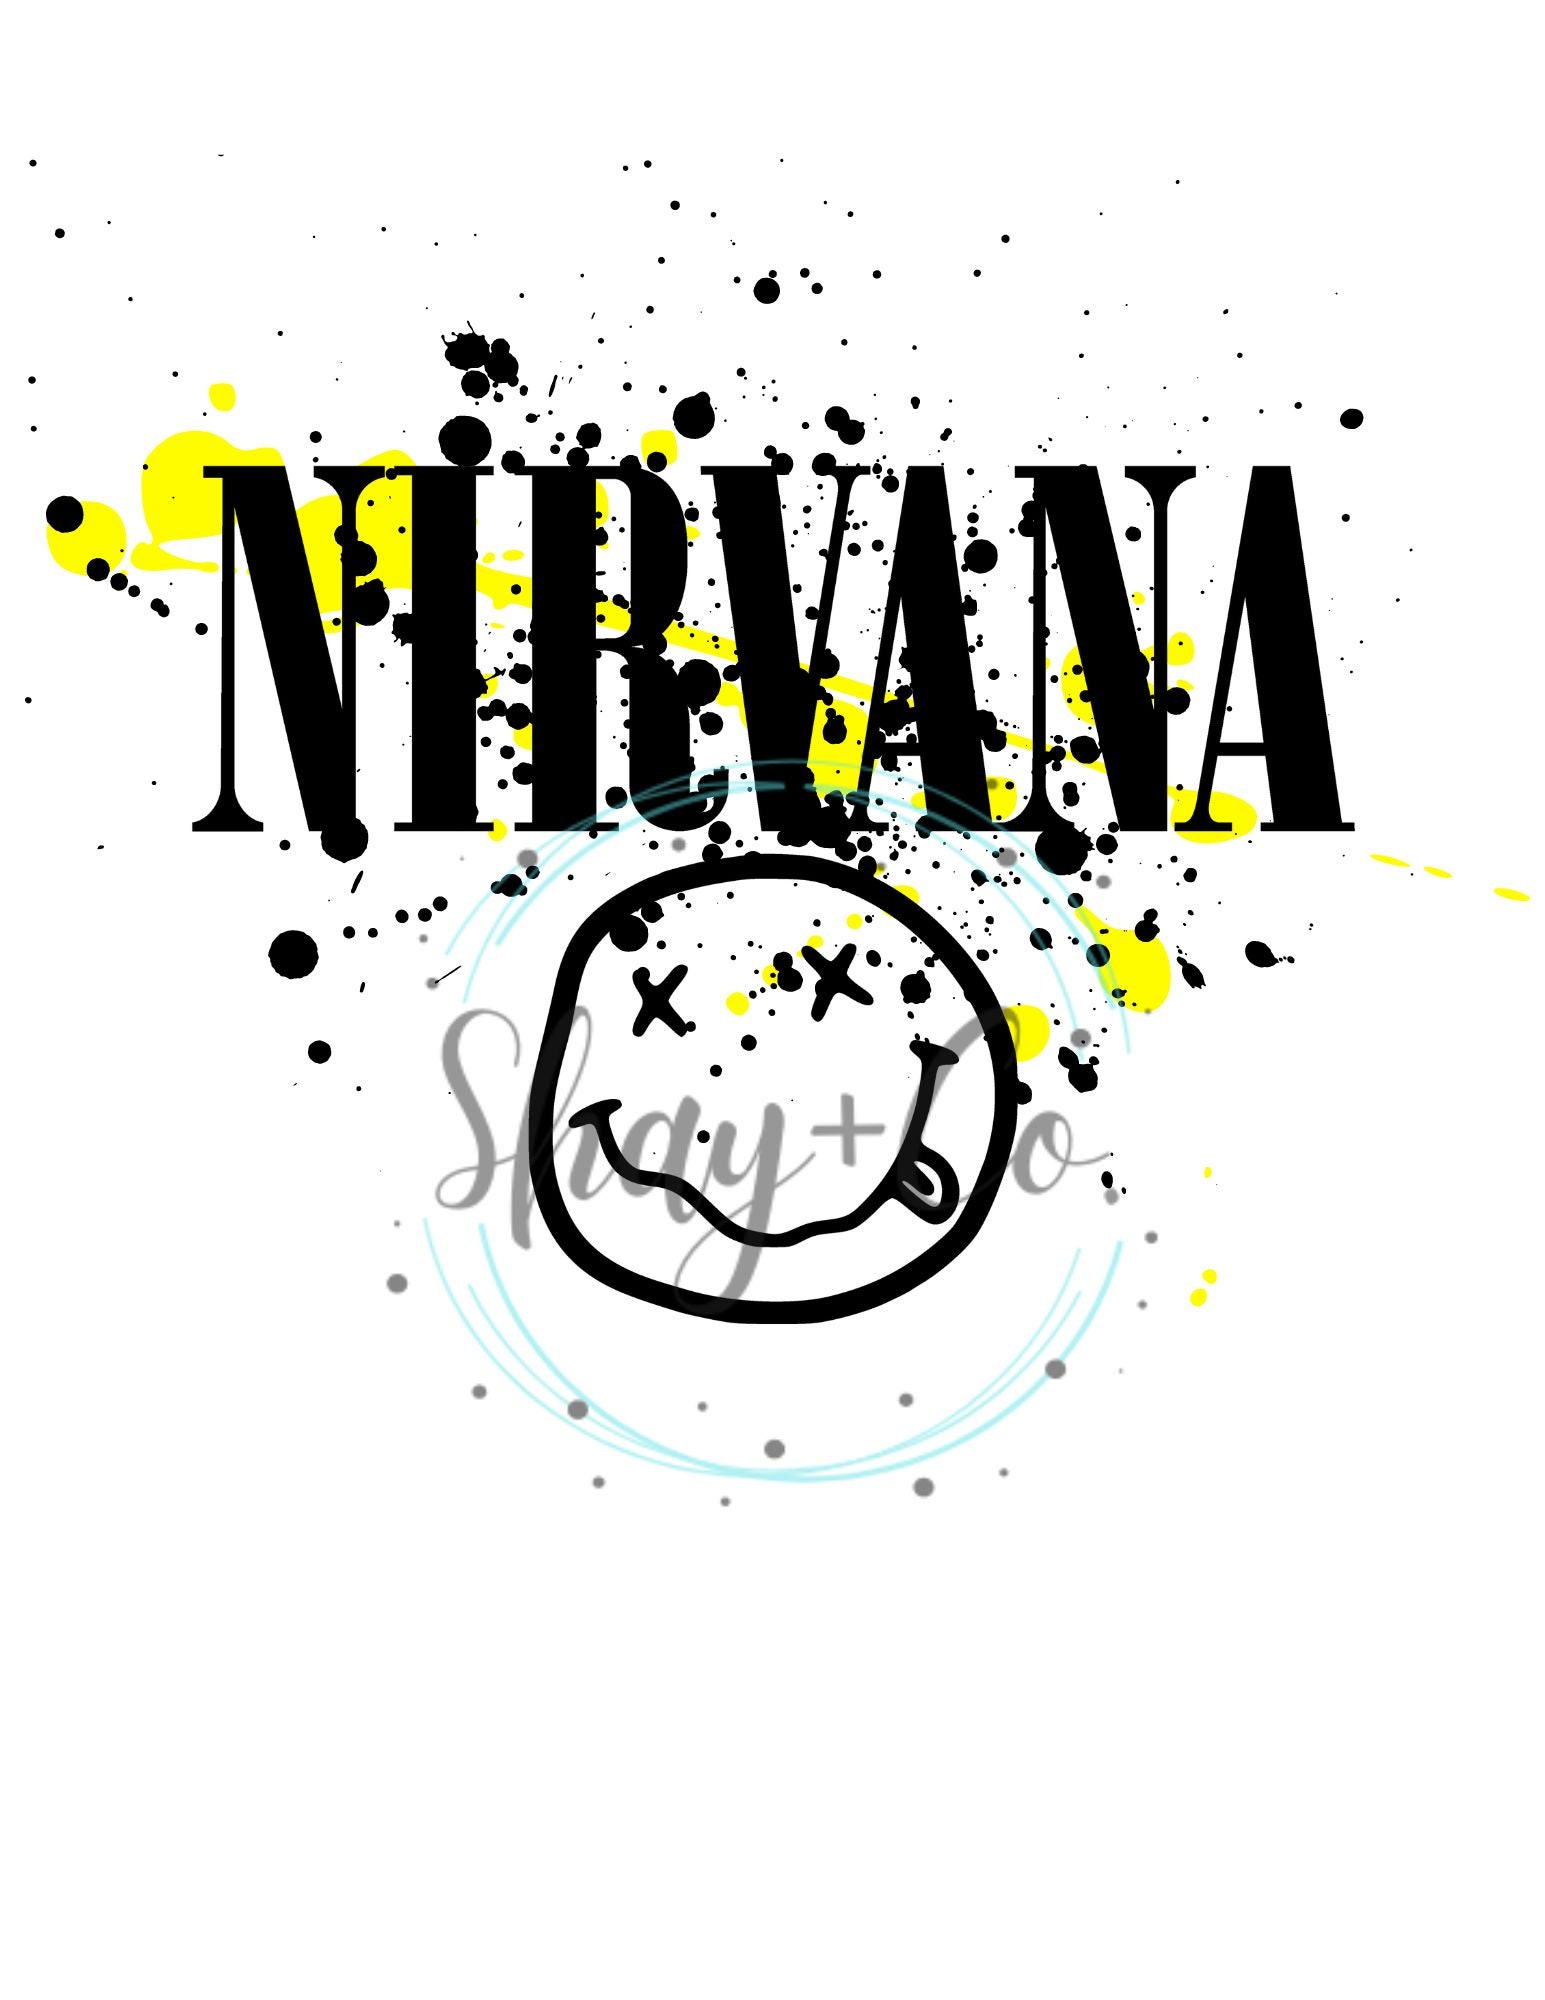 Rétro grunge logo -  France